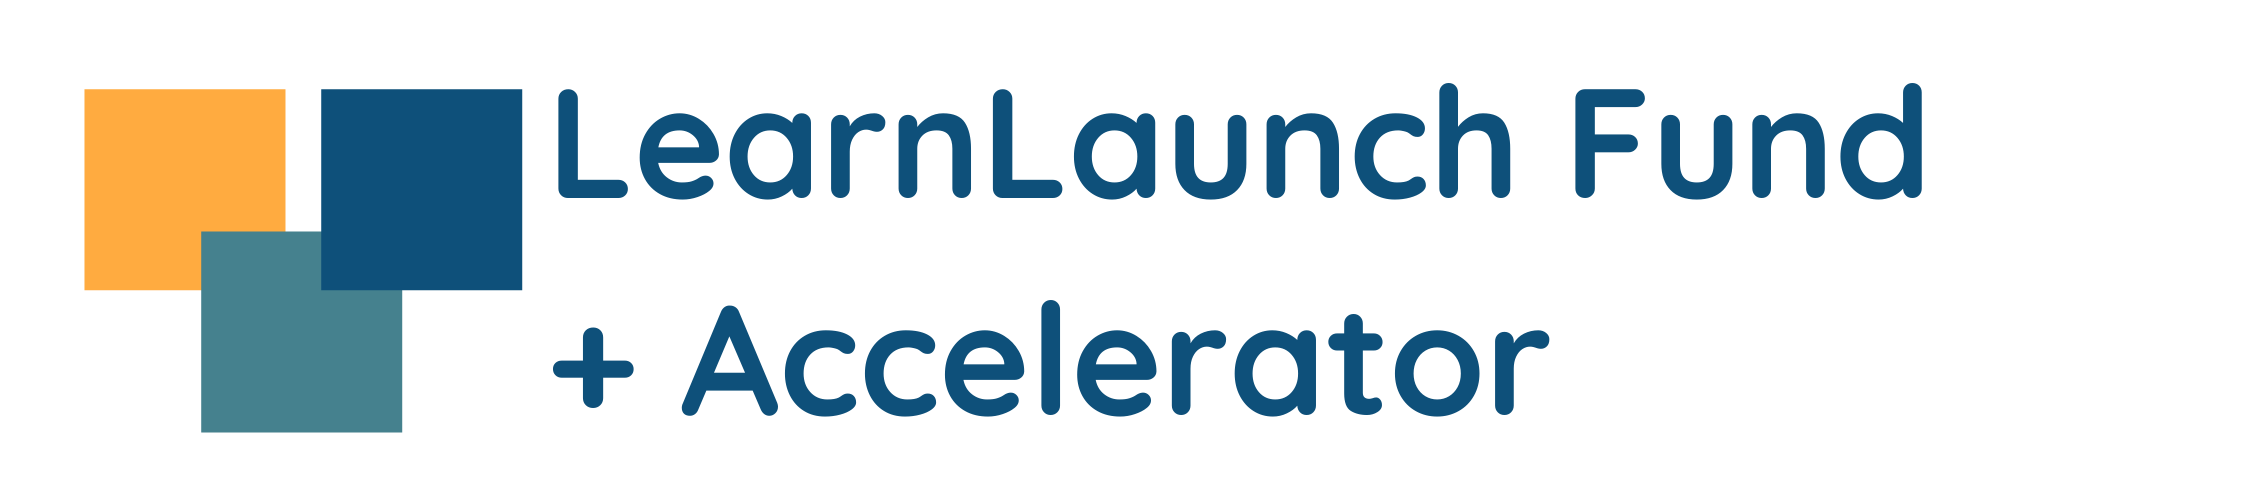 LearnLaunchAcceleratorFund_logo